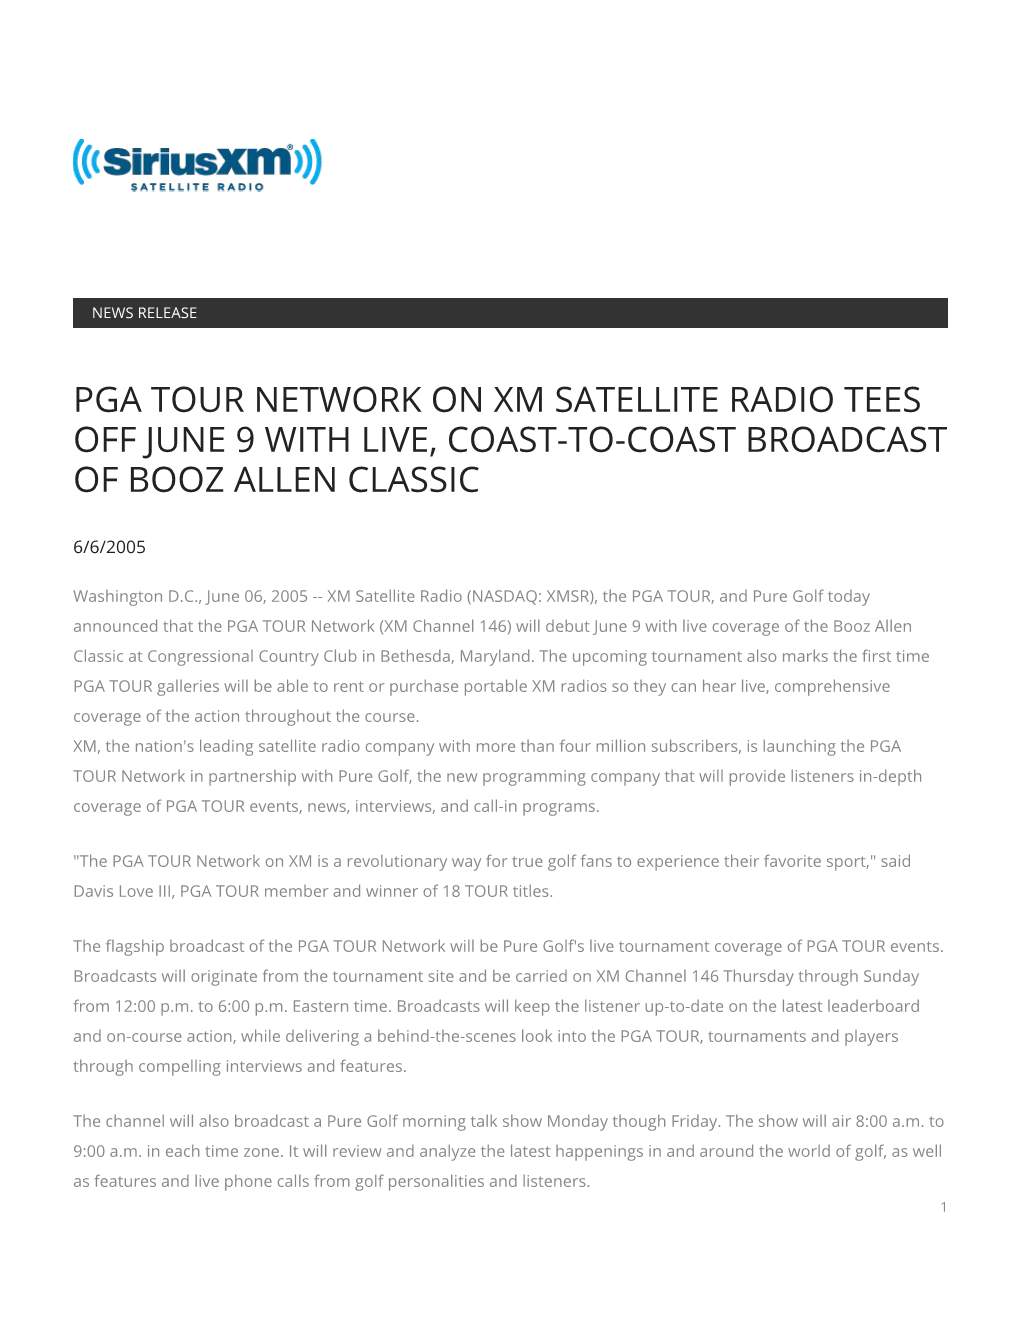 Pga Tour Network on Xm Satellite Radio Tees Off June 9 with Live, Coast-To-Coast Broadcast of Booz Allen Classic